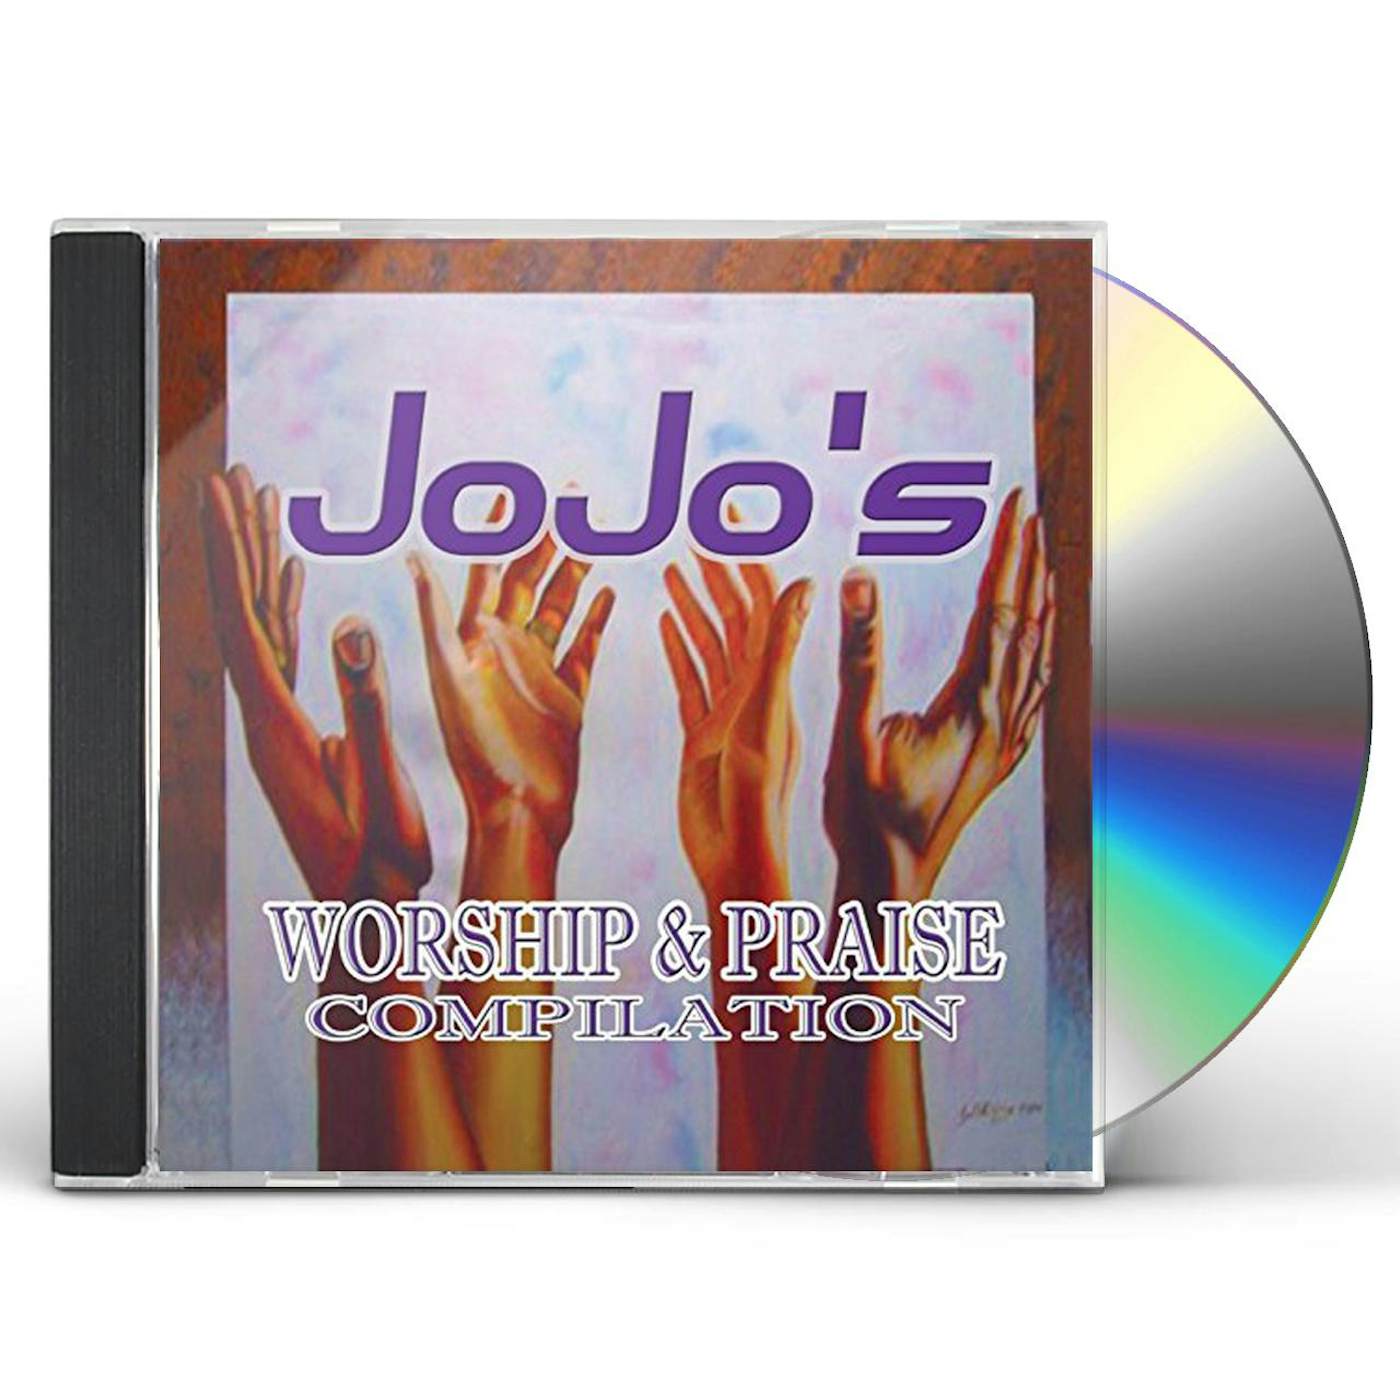 JOJO'S WORSHIP & PRAISE COMPILATION CD